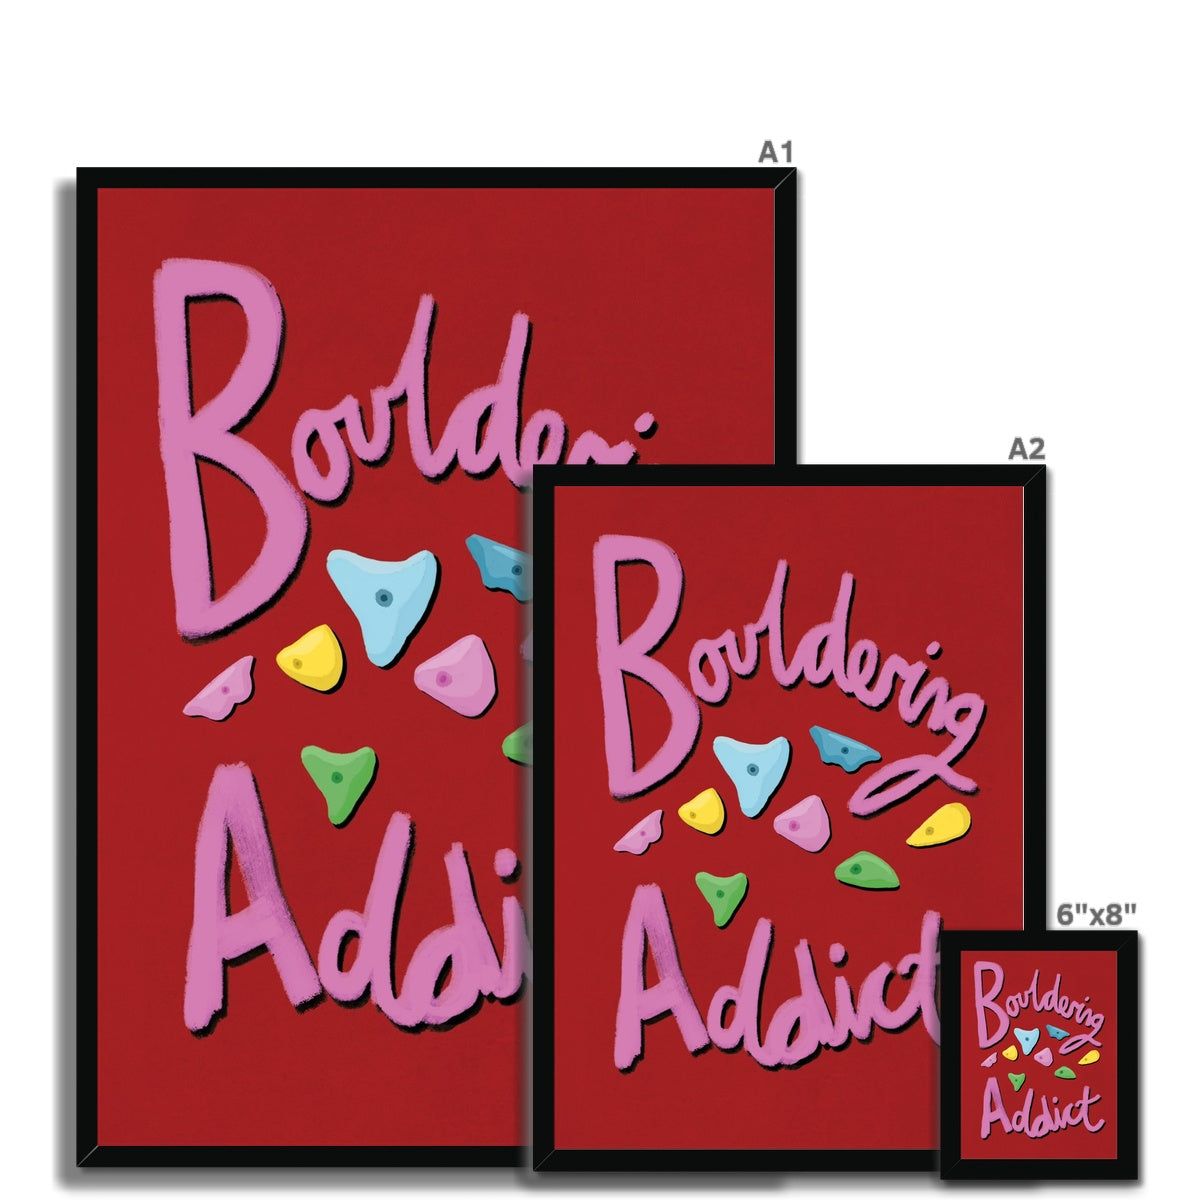 Bouldering Addict - Red and Pink Framed Print